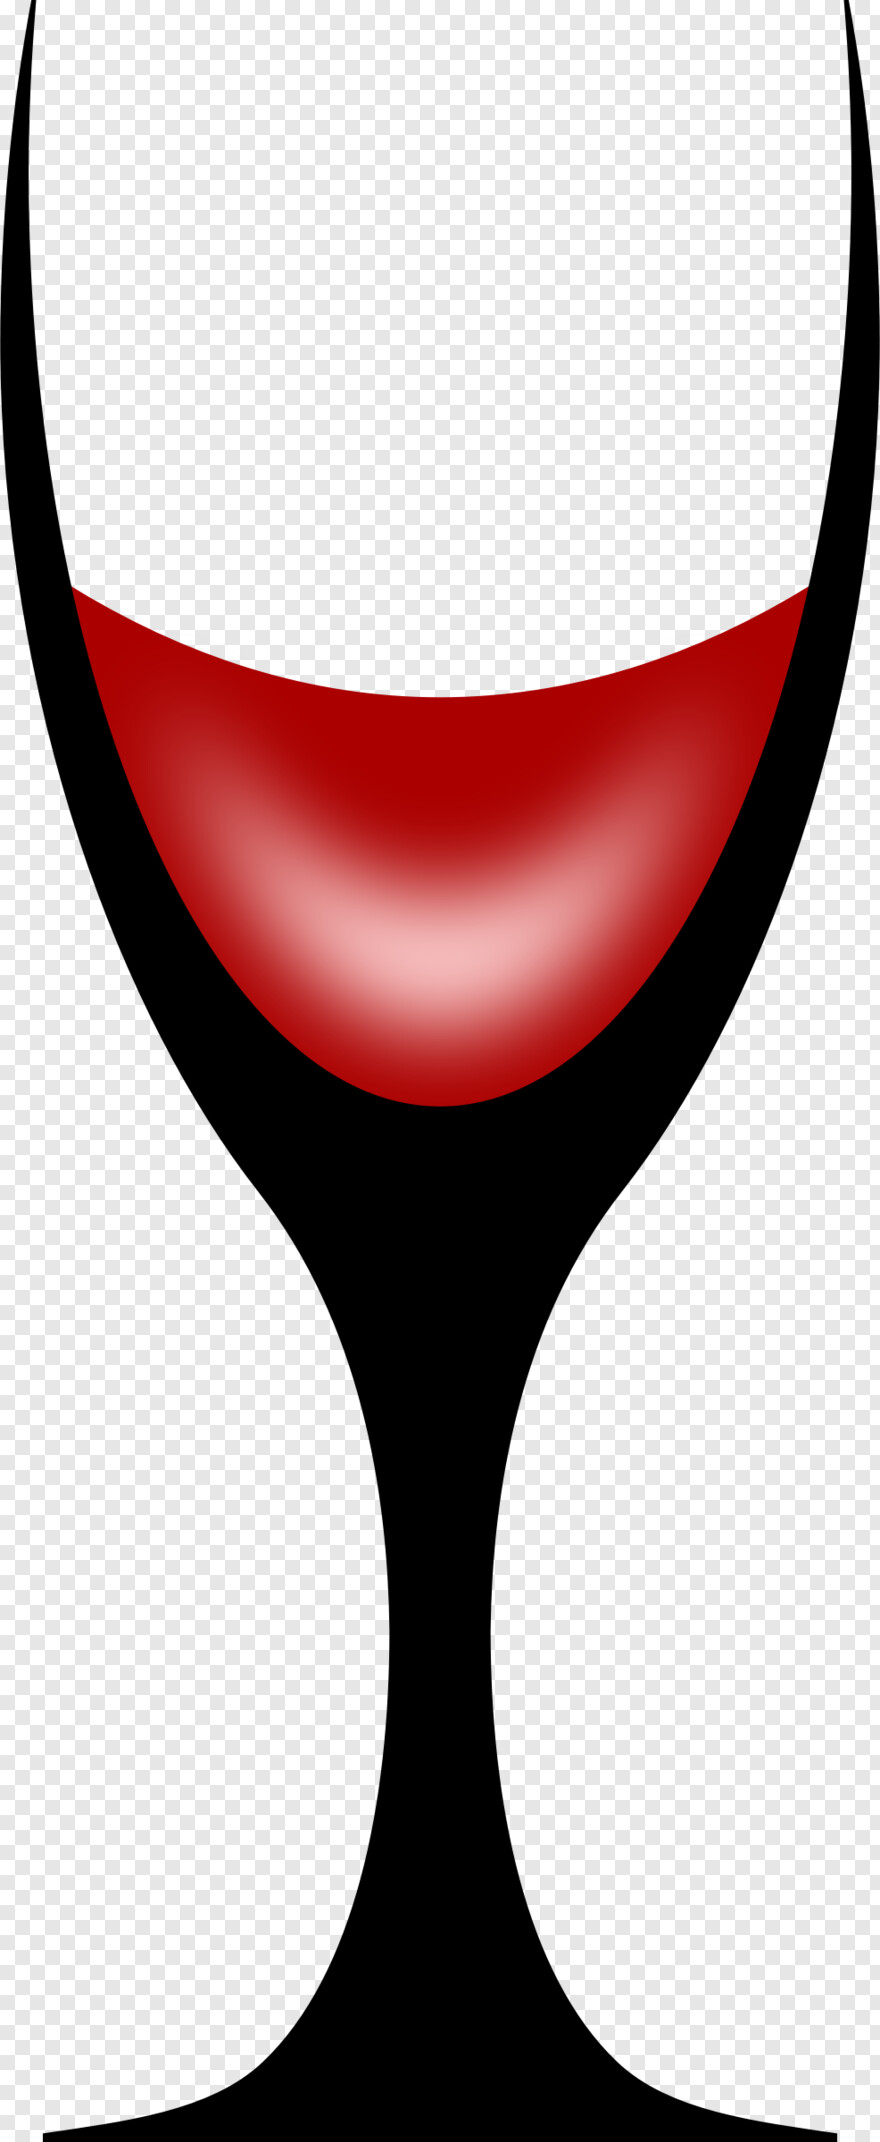 wine-glass-icon # 366440